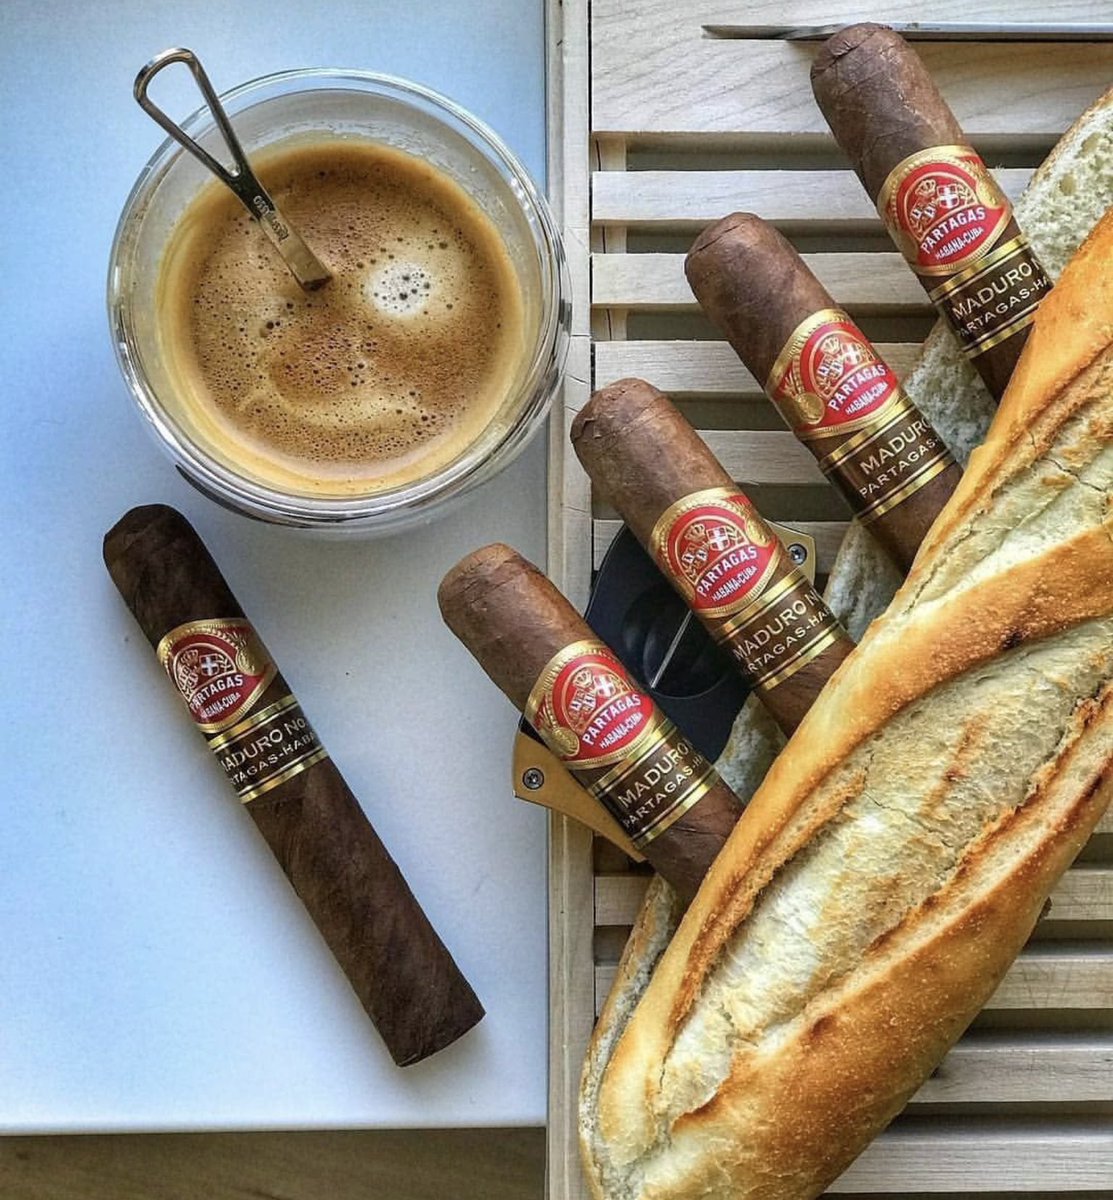 #espresso #cigar #ItalianBread #BigAsh #CigarLounge #Habana #NowSmoking #partagas #follo4folloback